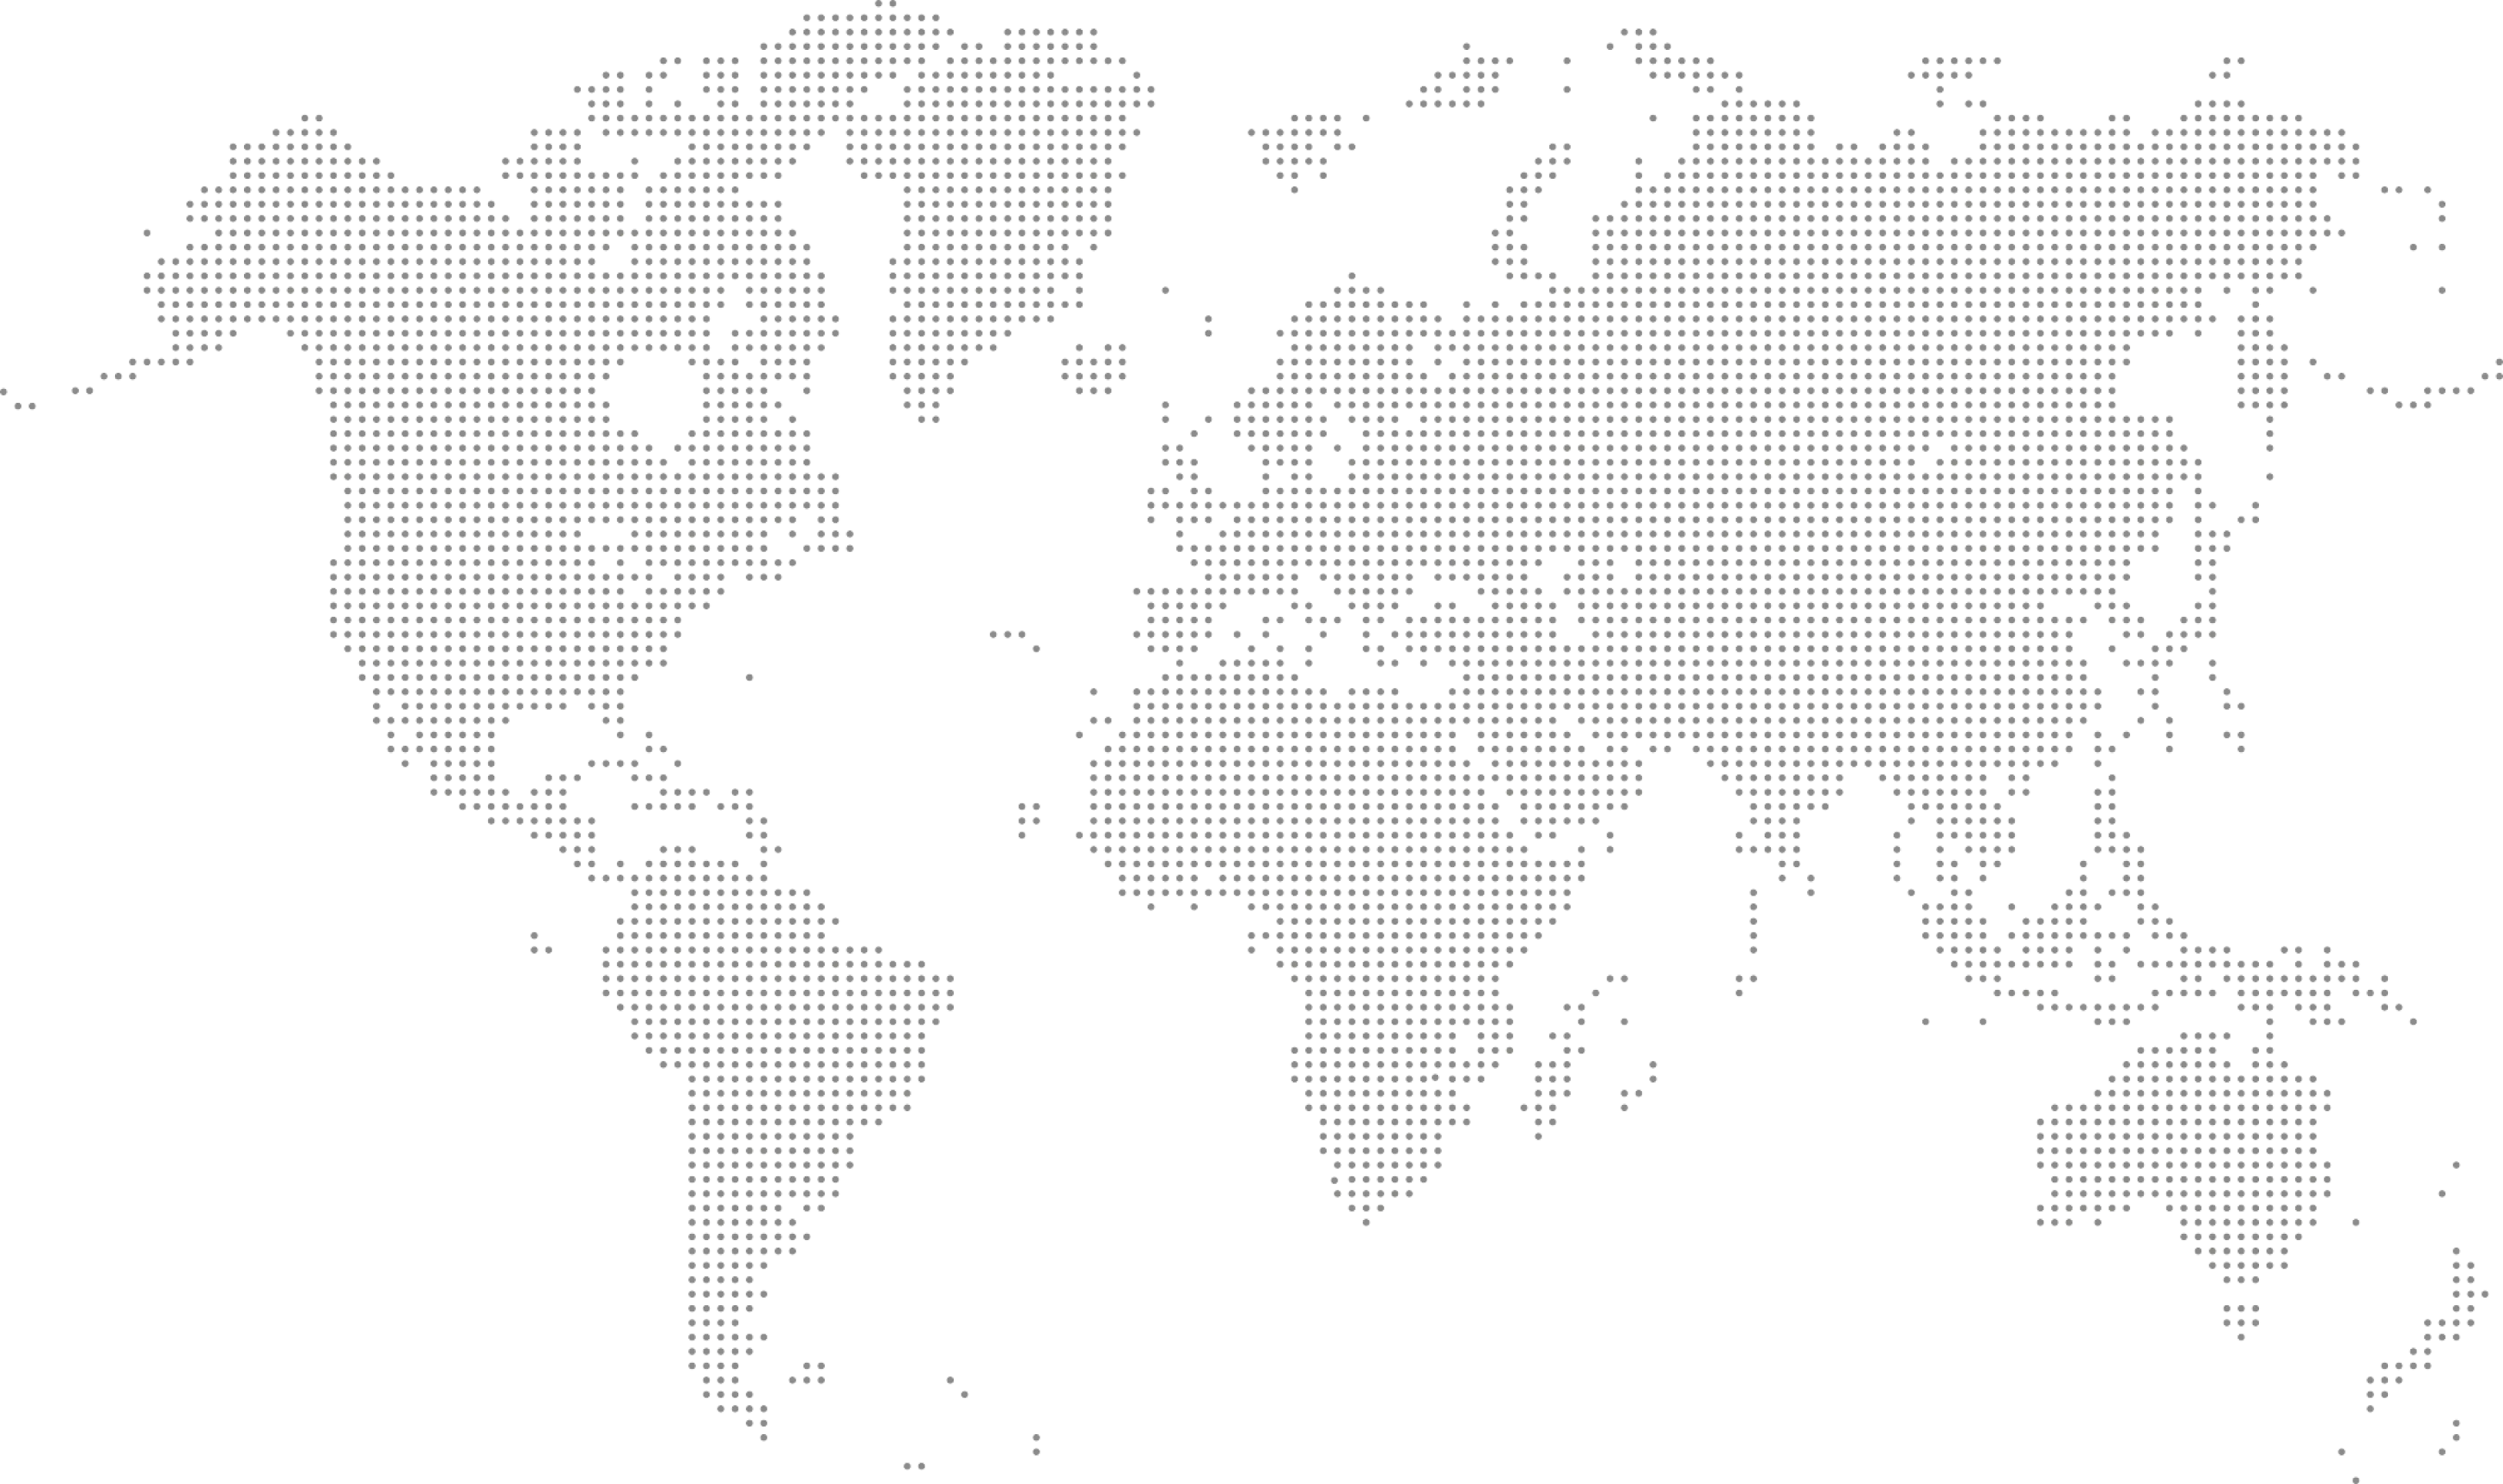 pepul in world map